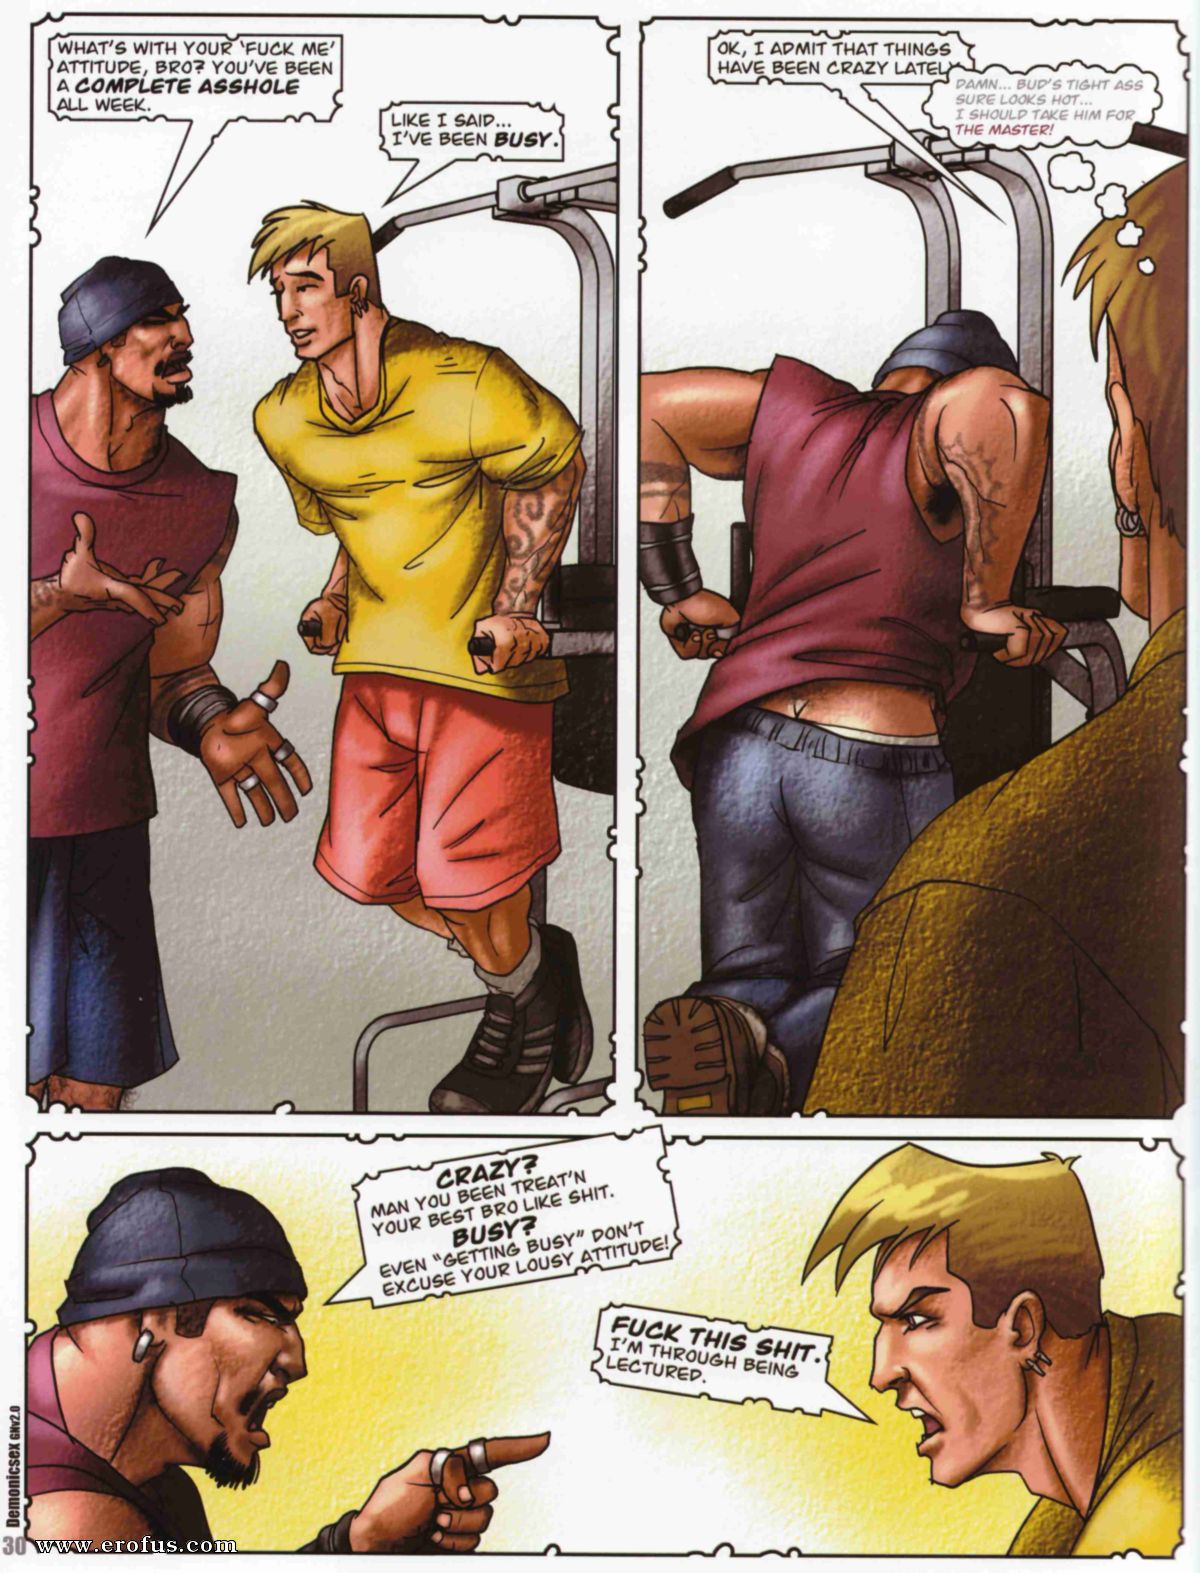 Hot gay rough cartoon comic porn sex